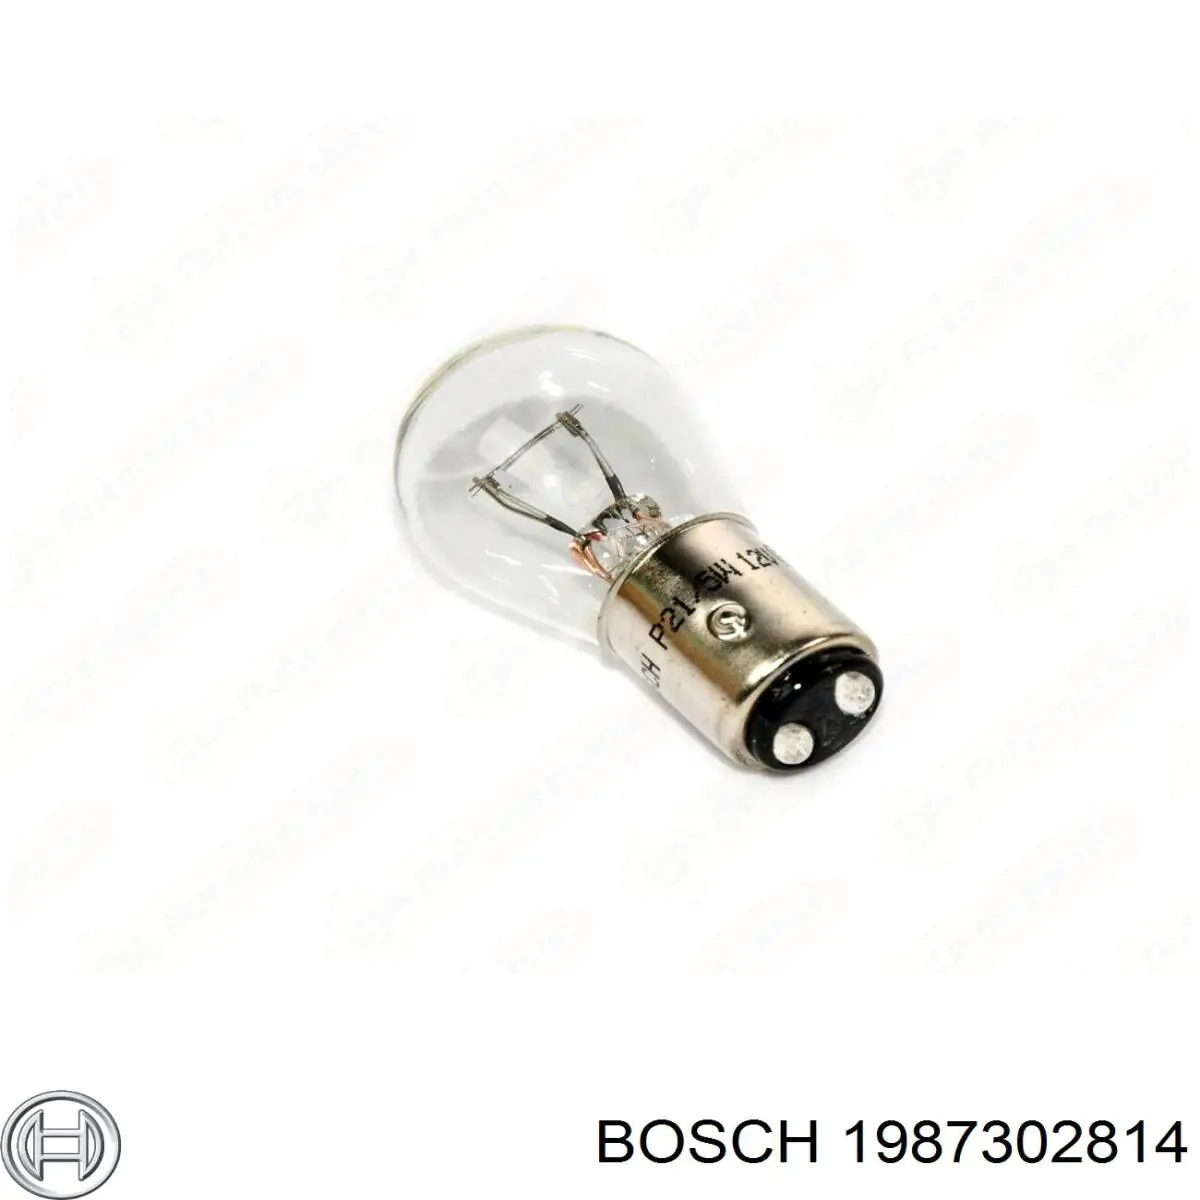 1987302814 Bosch bombilla